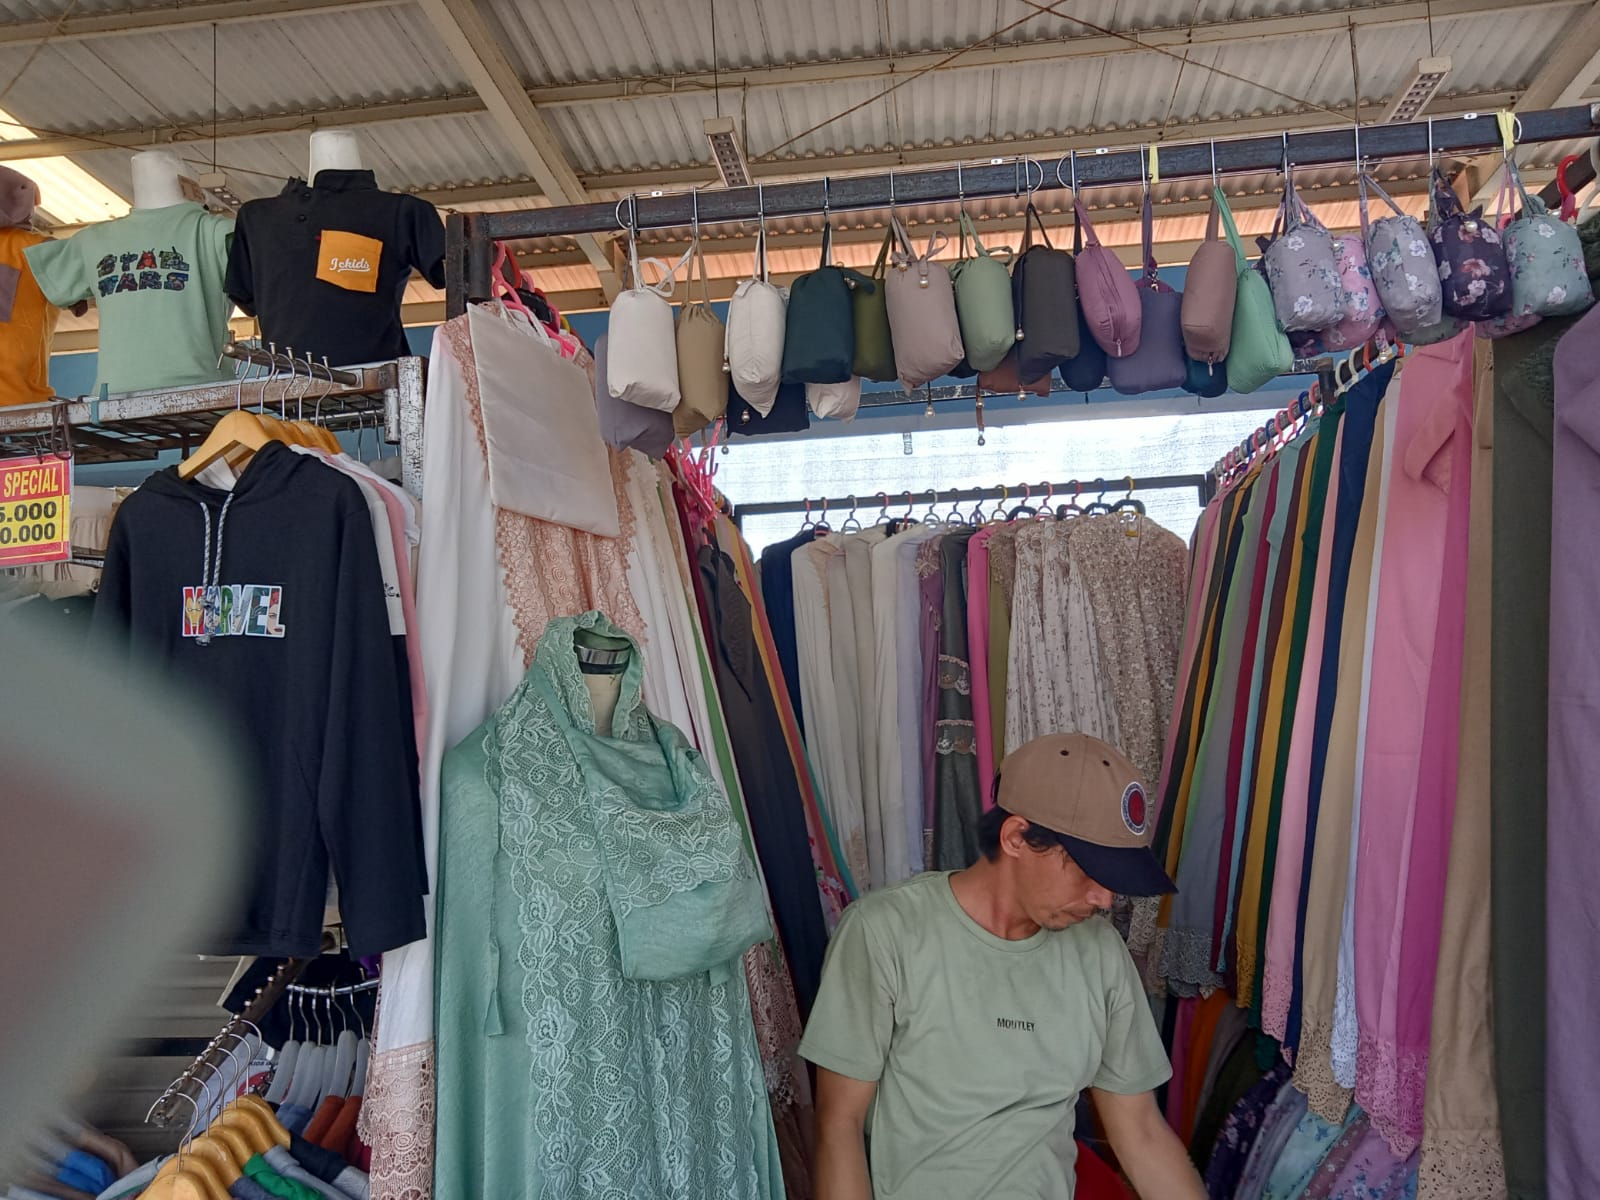 Bulan Ramadan Pasar Tanah Abang Dibanjiri Pembeli, Omset Penjualan Meningkat Drastis